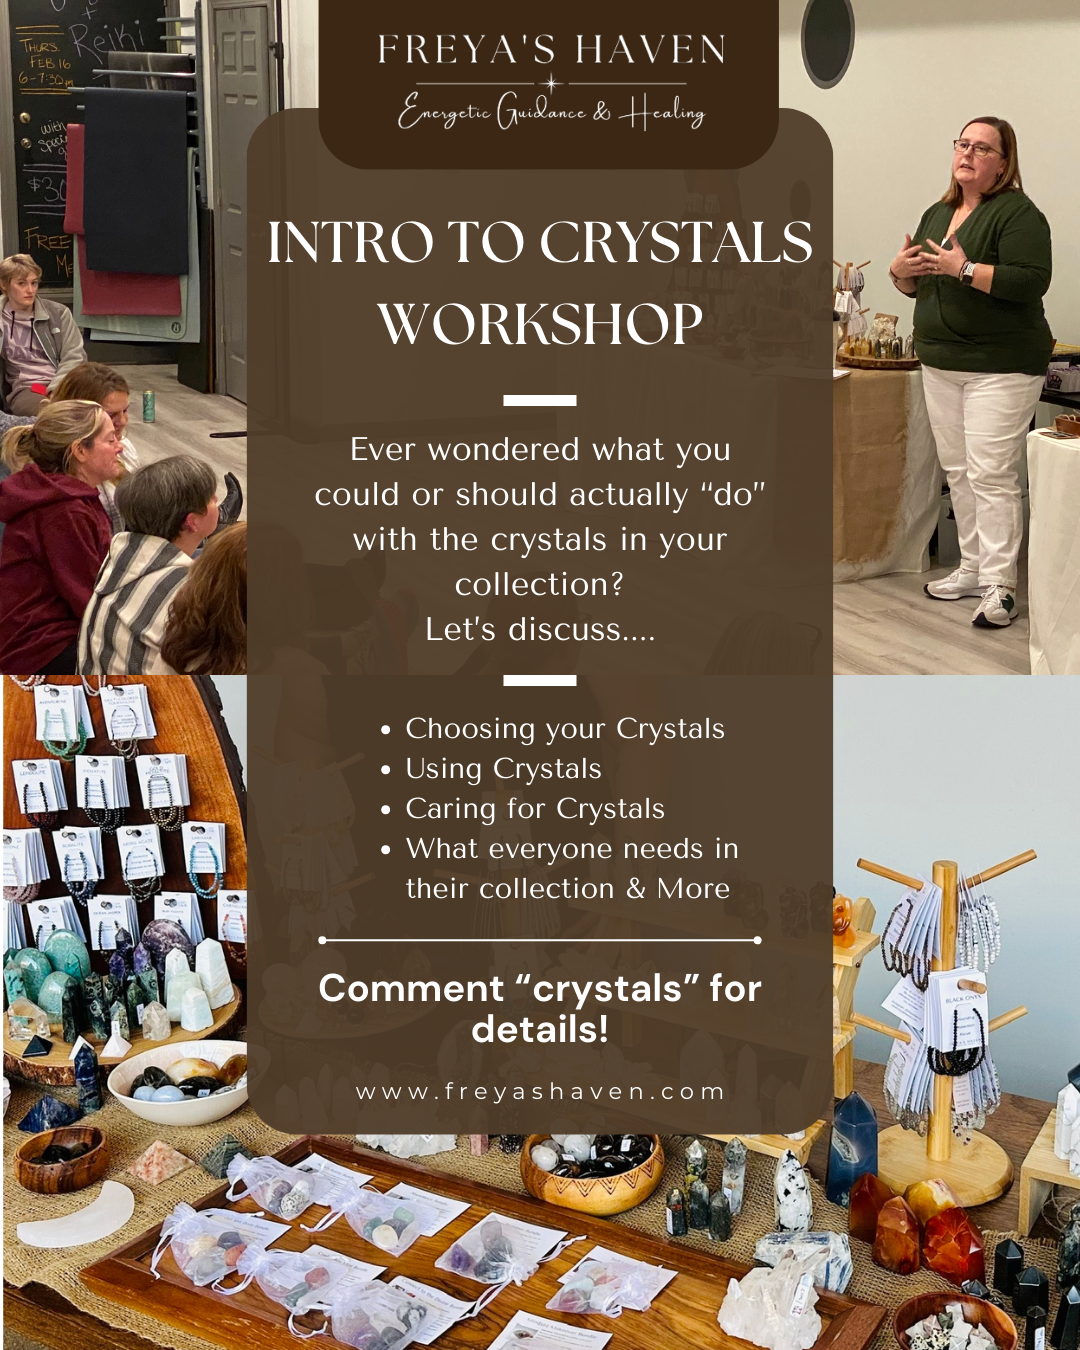 Crystals 101 Workshop - February 10th, 10 - 11 AM